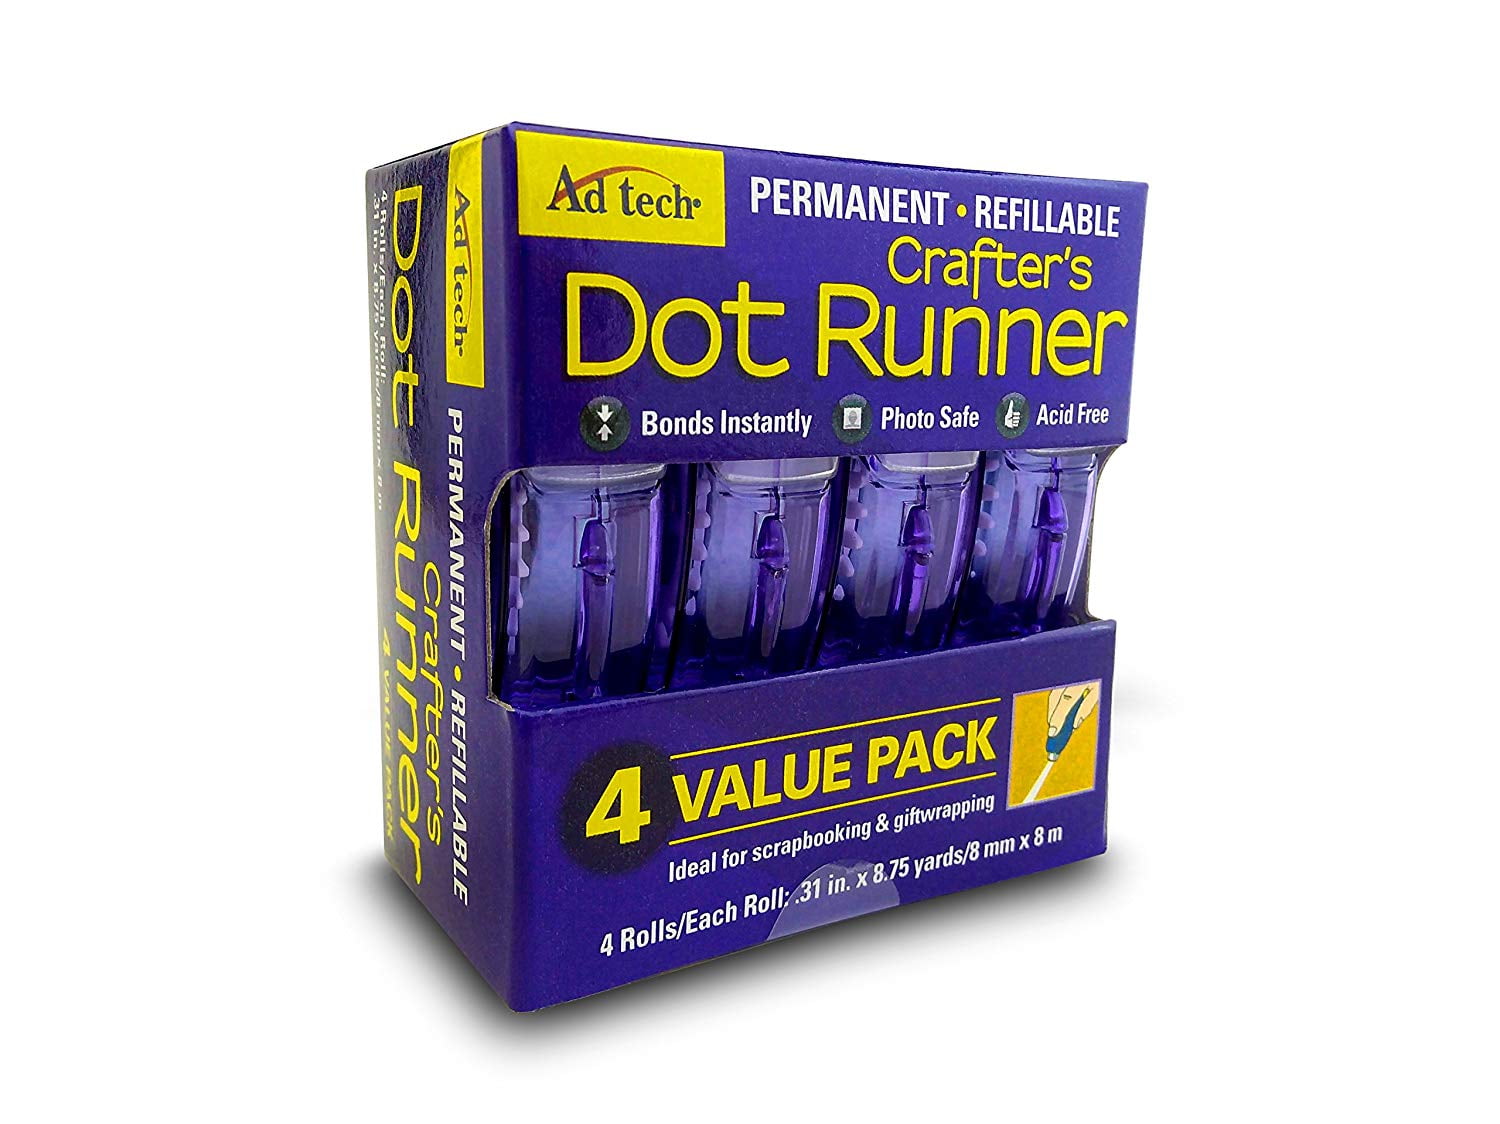 12 Packs: 4 ct. (48 total) AdTech® Permanent Micro Dot Glue Runner™ 